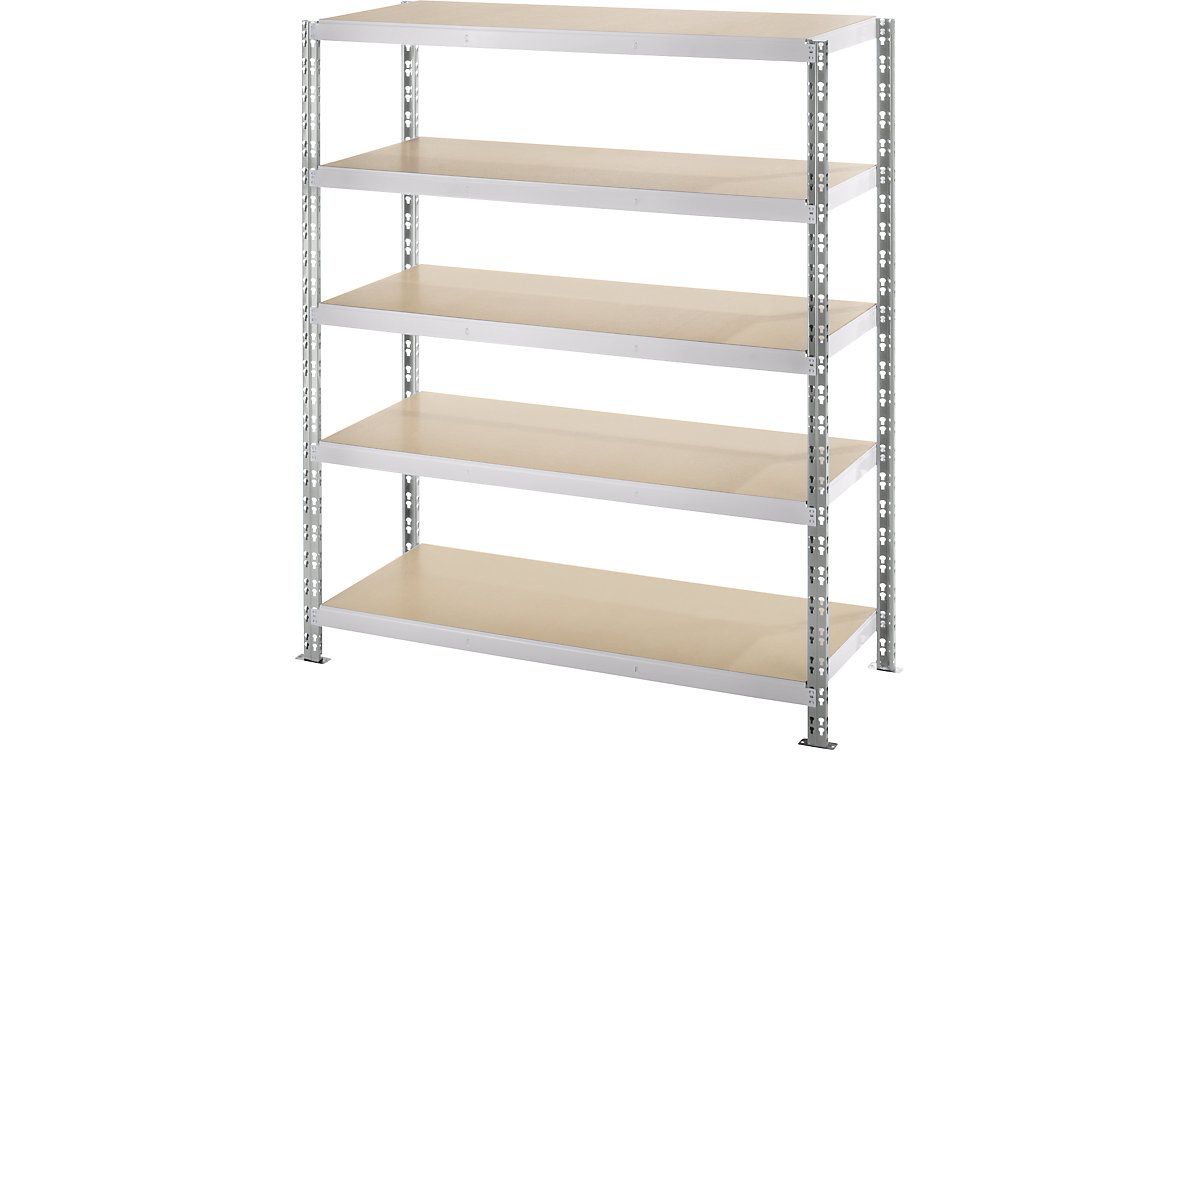 Wide span boltless shelf unit with moulded chipboard shelves, depth 600 mm, standard shelf unit, HxW 1820 x 1550 mm